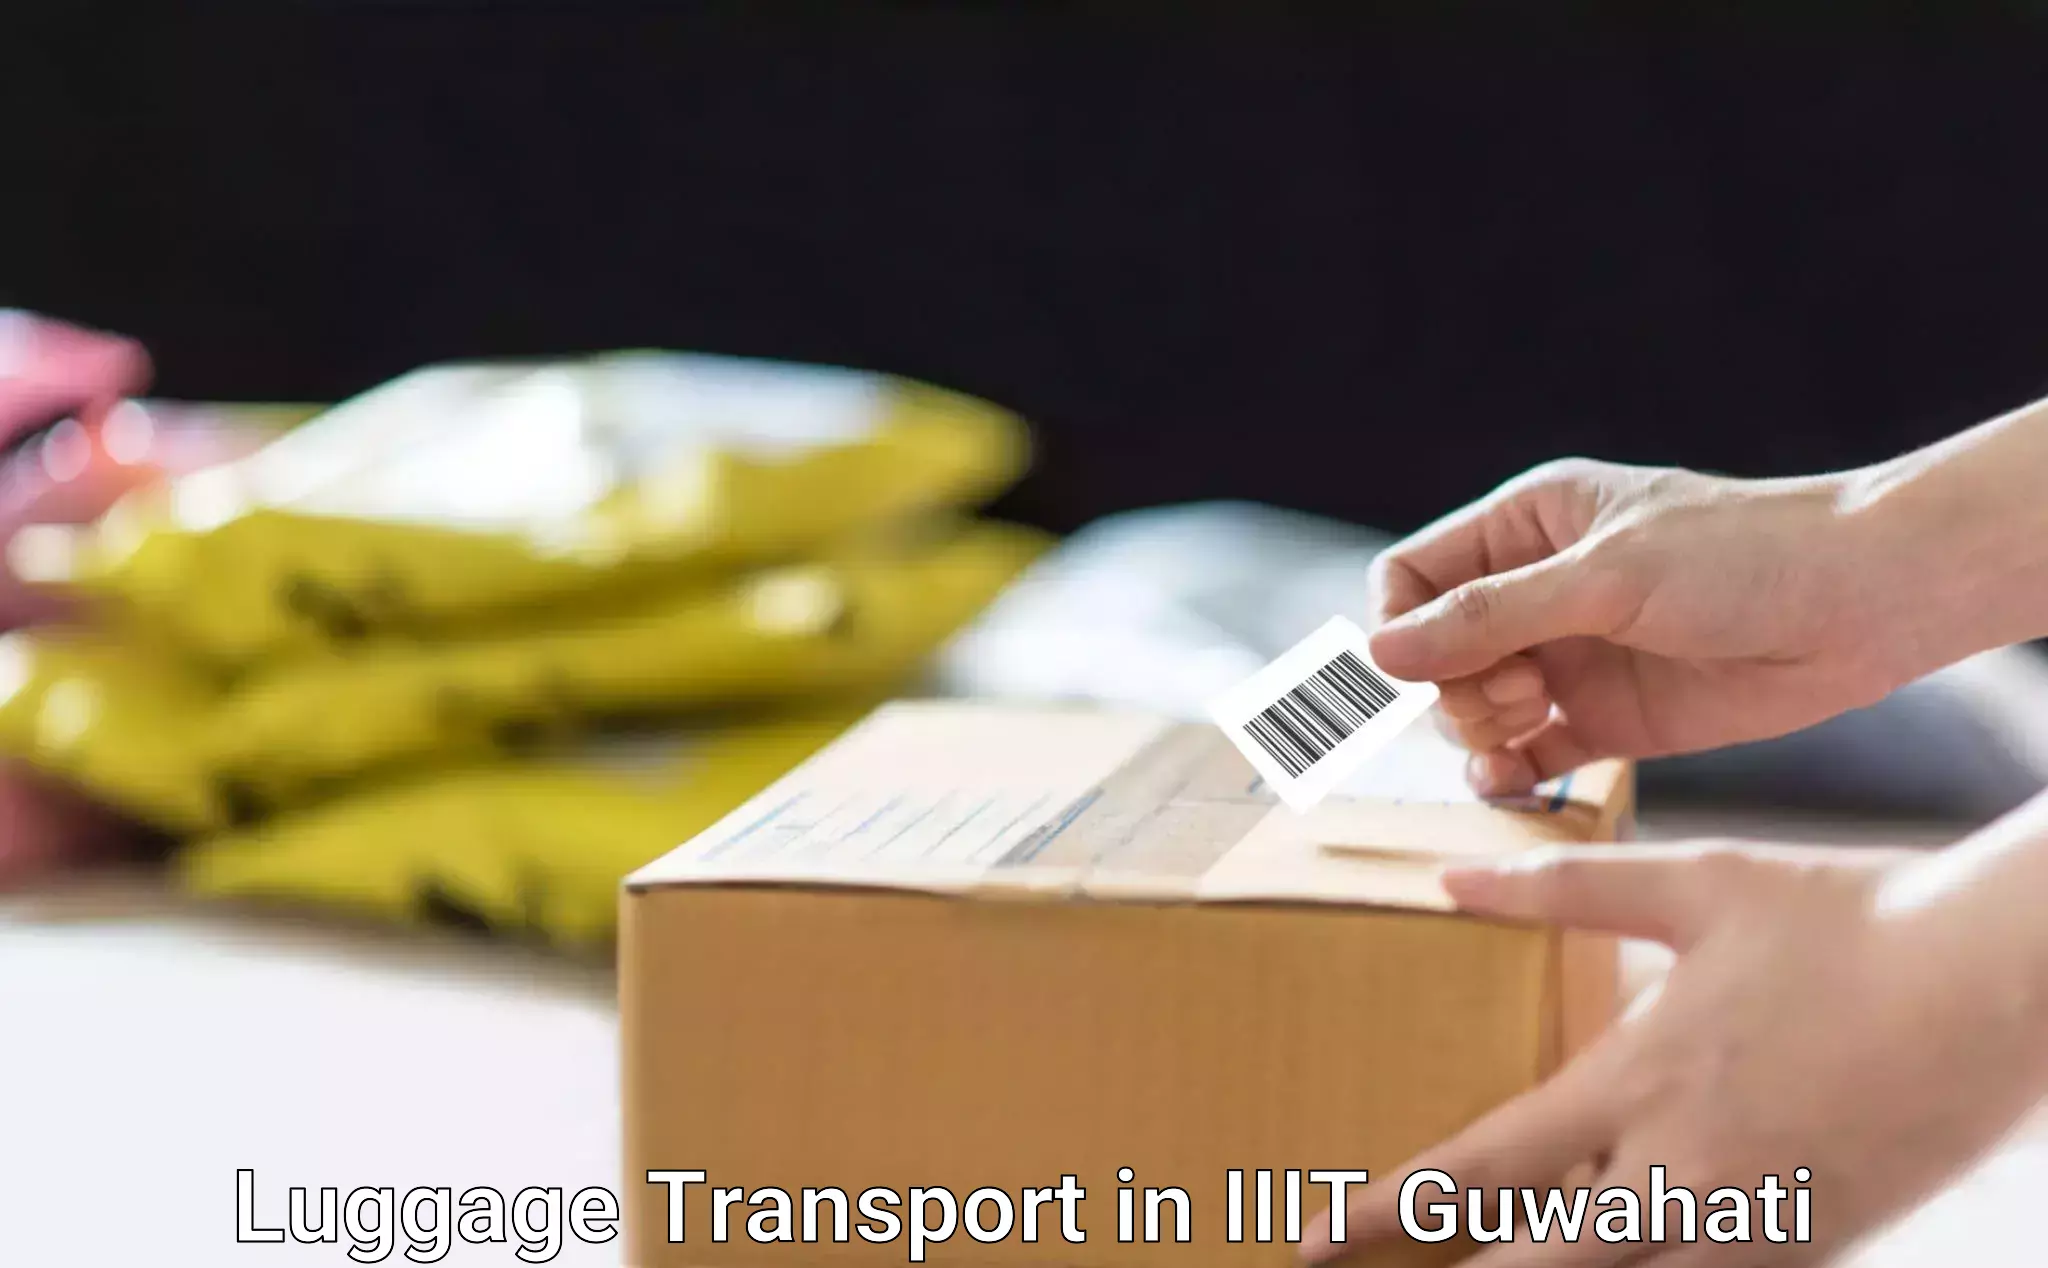 Baggage transport estimate in IIIT Guwahati